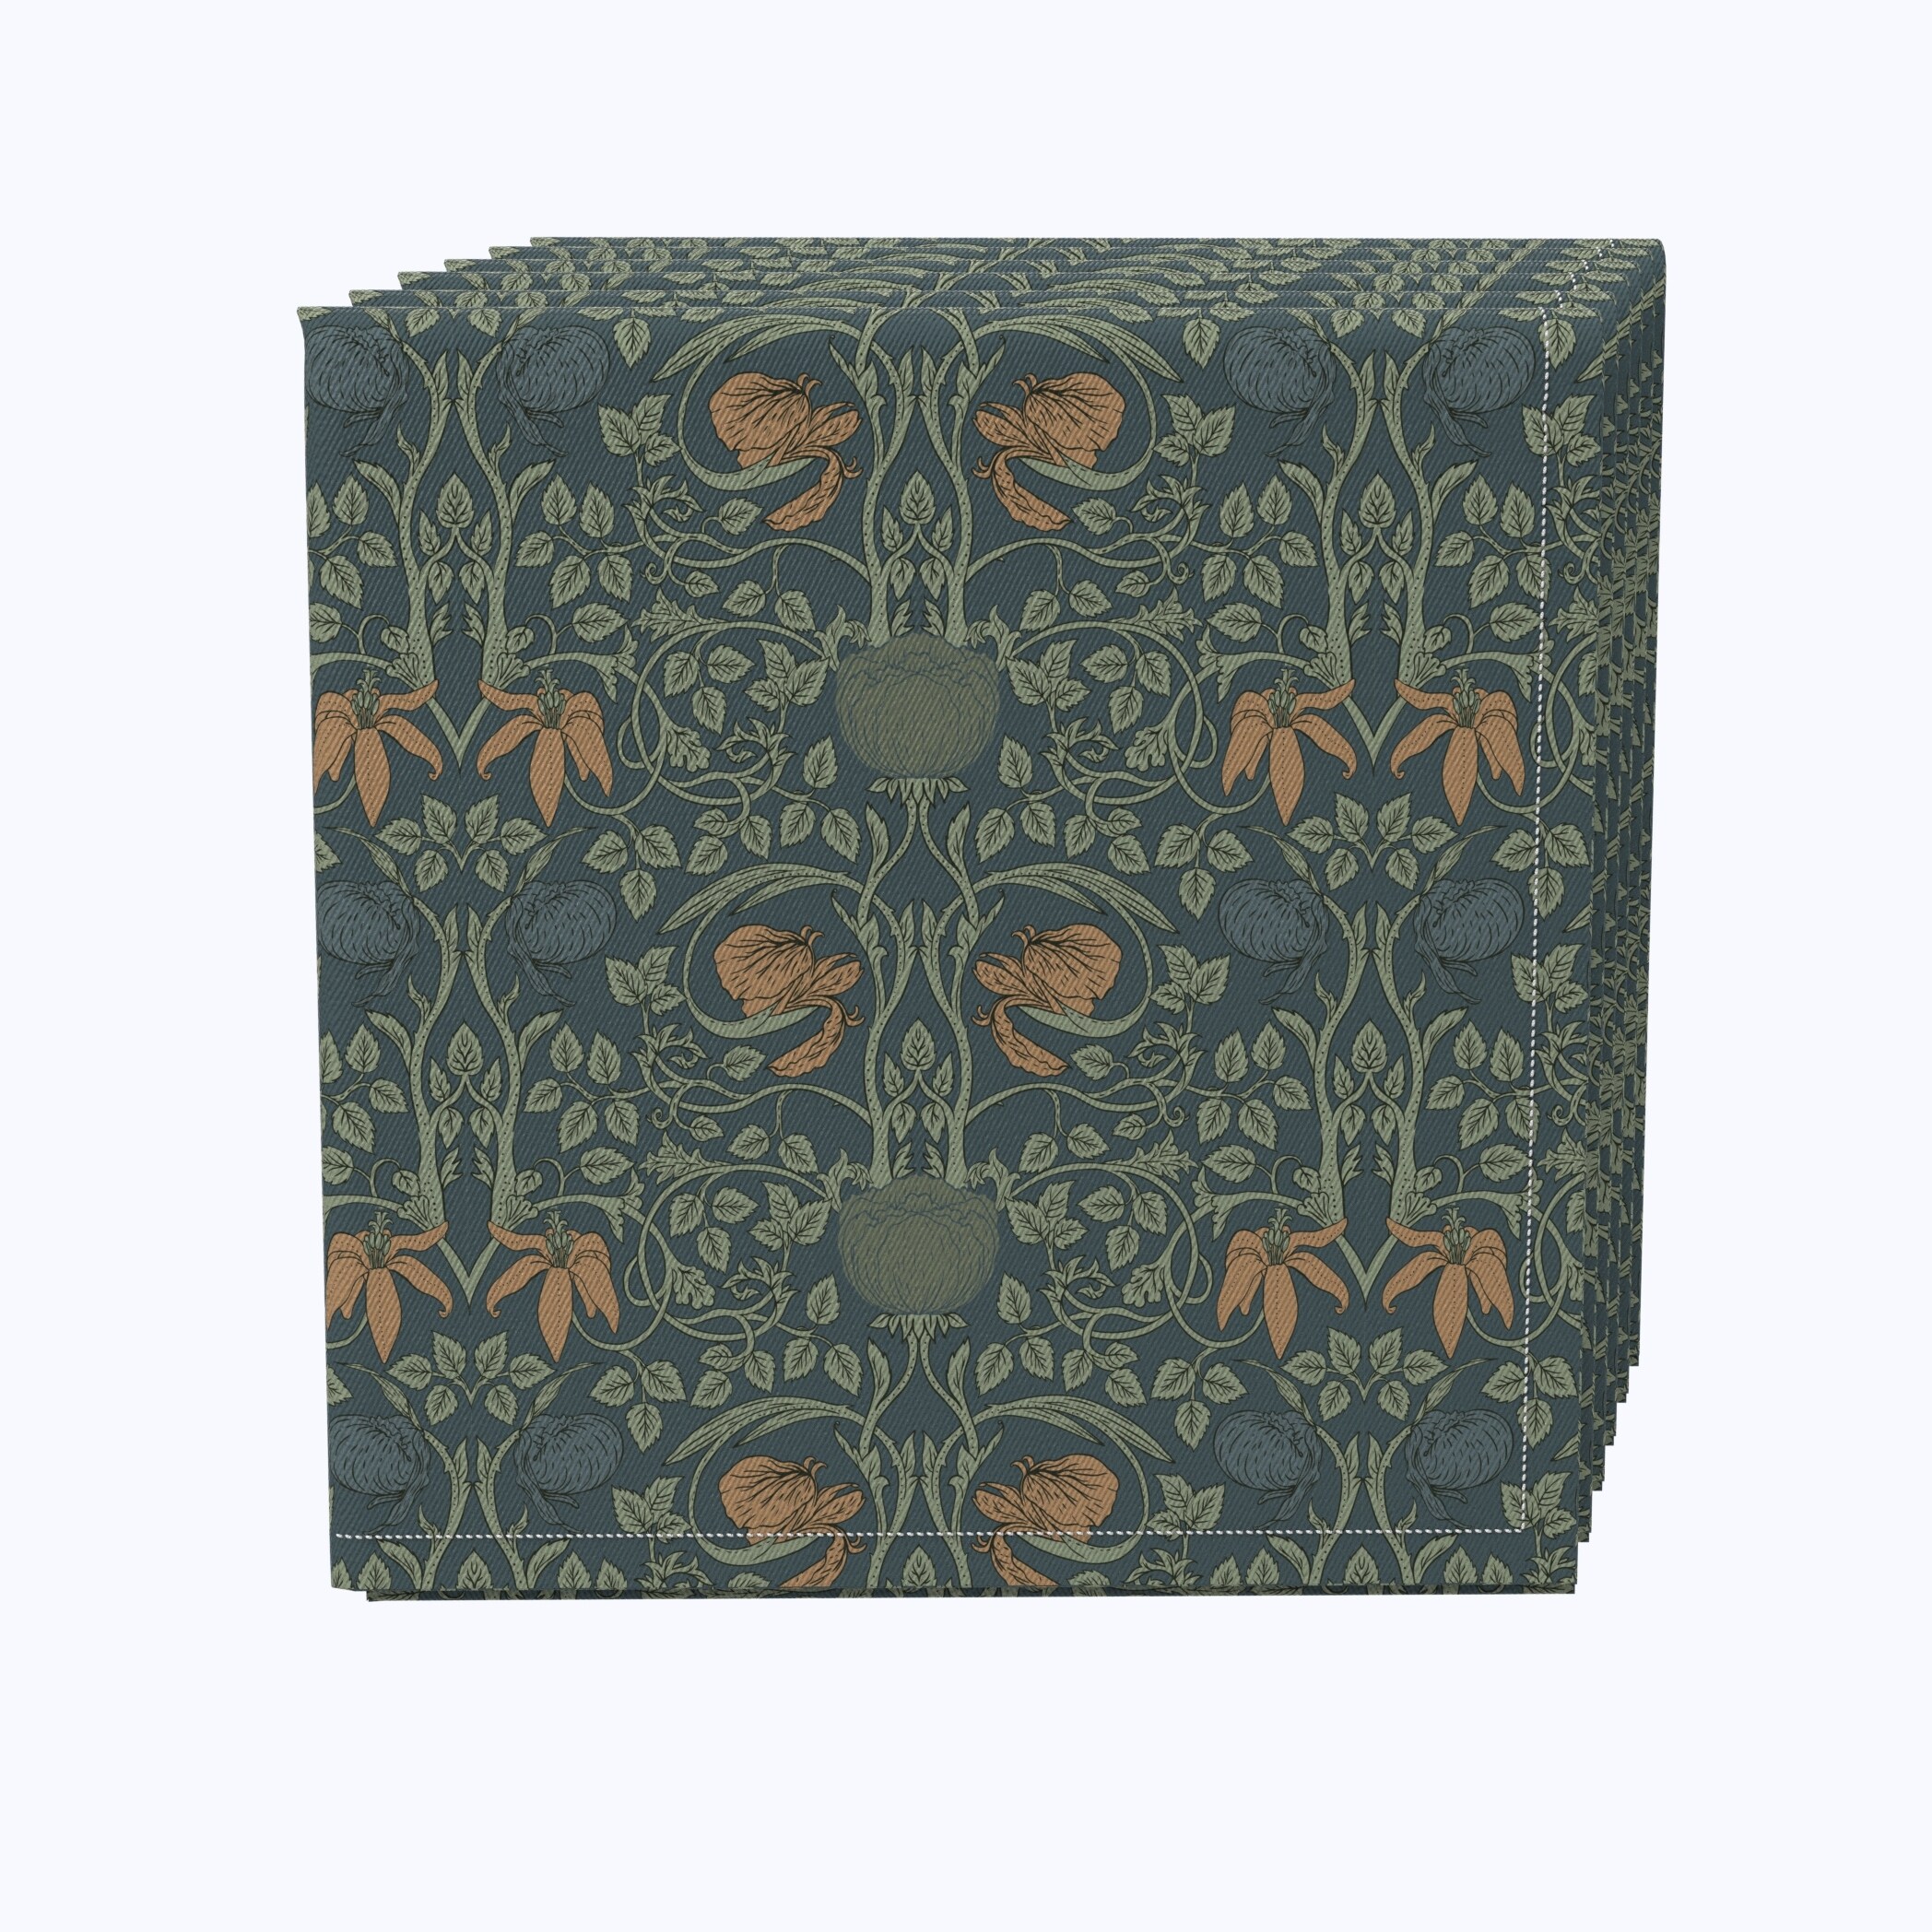 Fabric Textile Products, Inc. Napkin Set of 4, 100% Cotton, 20x20", Floral 51 - 20 x 20